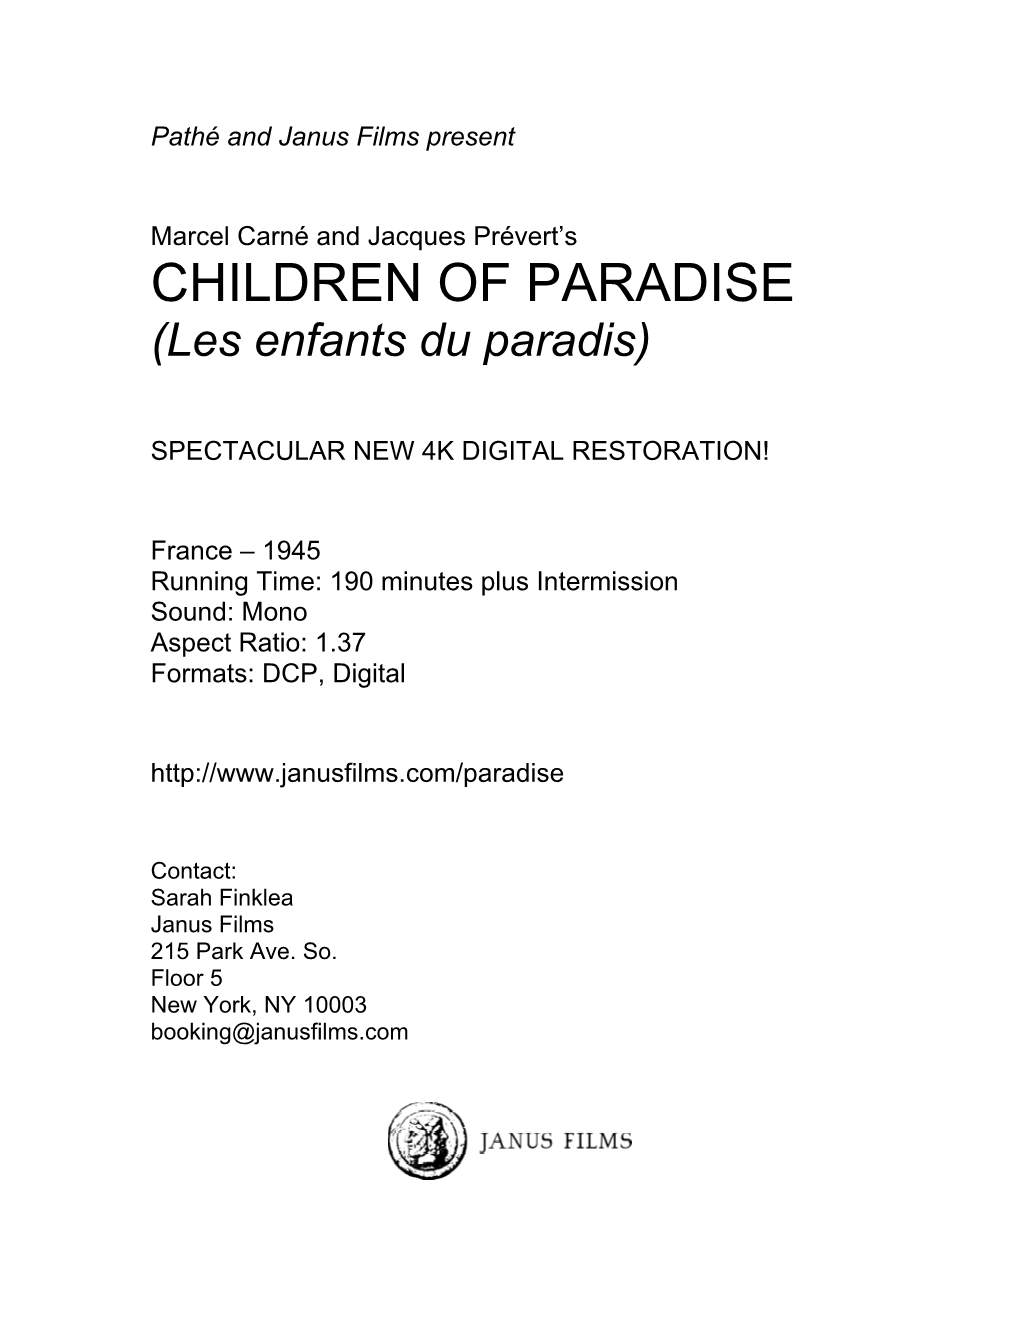 Children of Paradise Press Notes